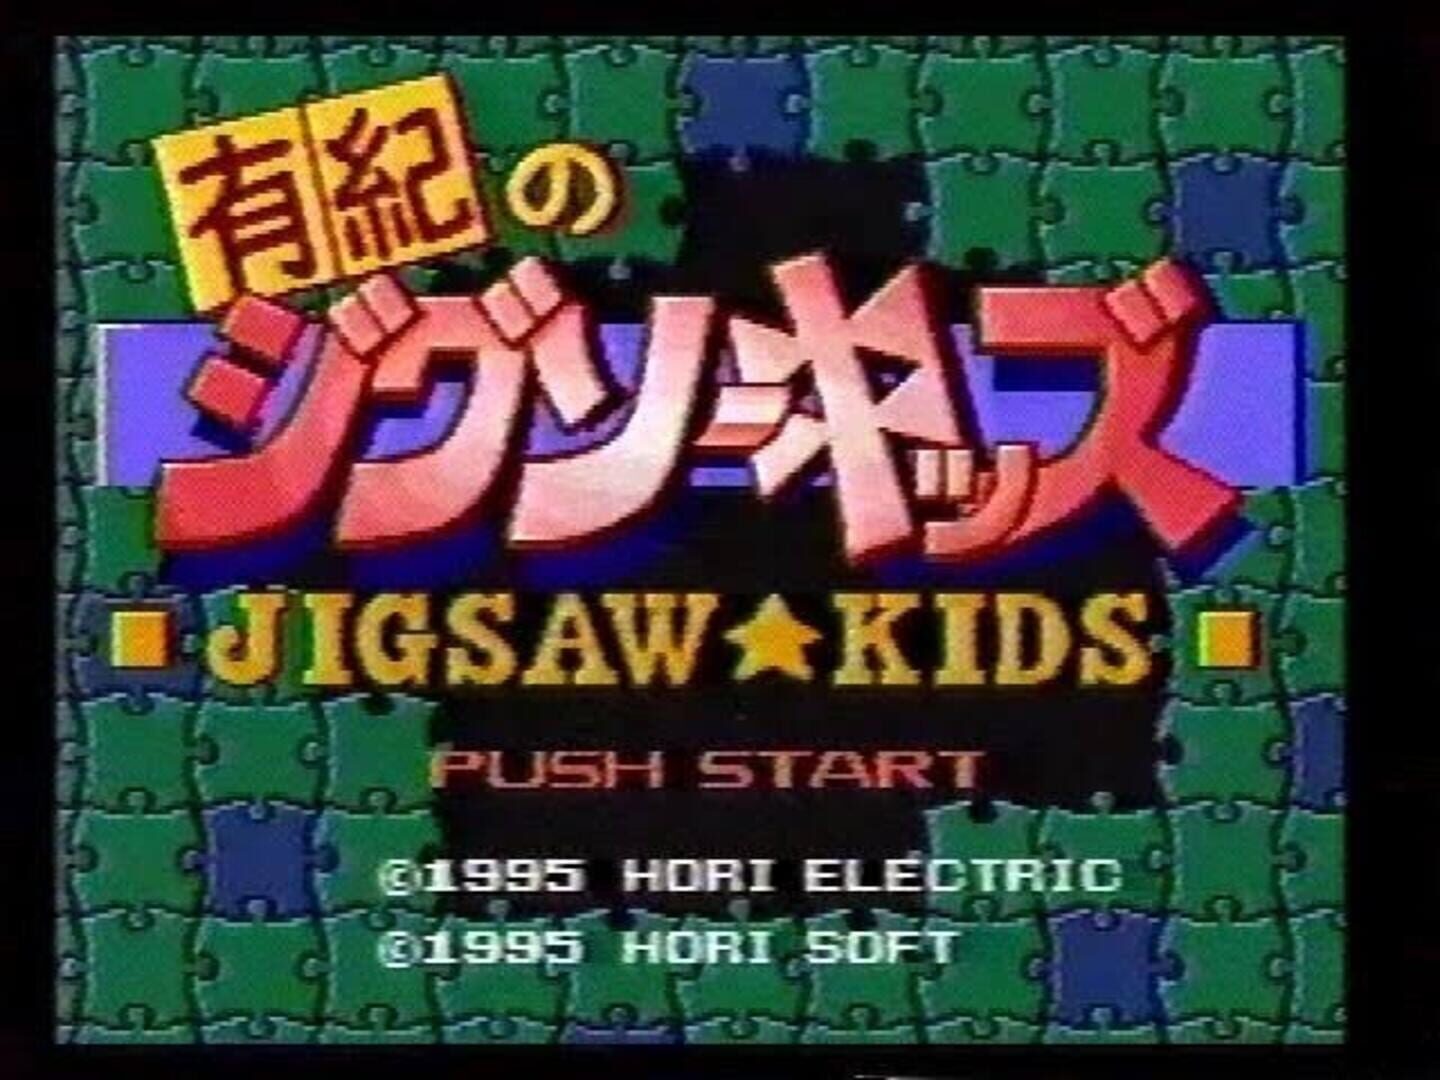 Captura de pantalla - Yuki no Jigsaw Kids